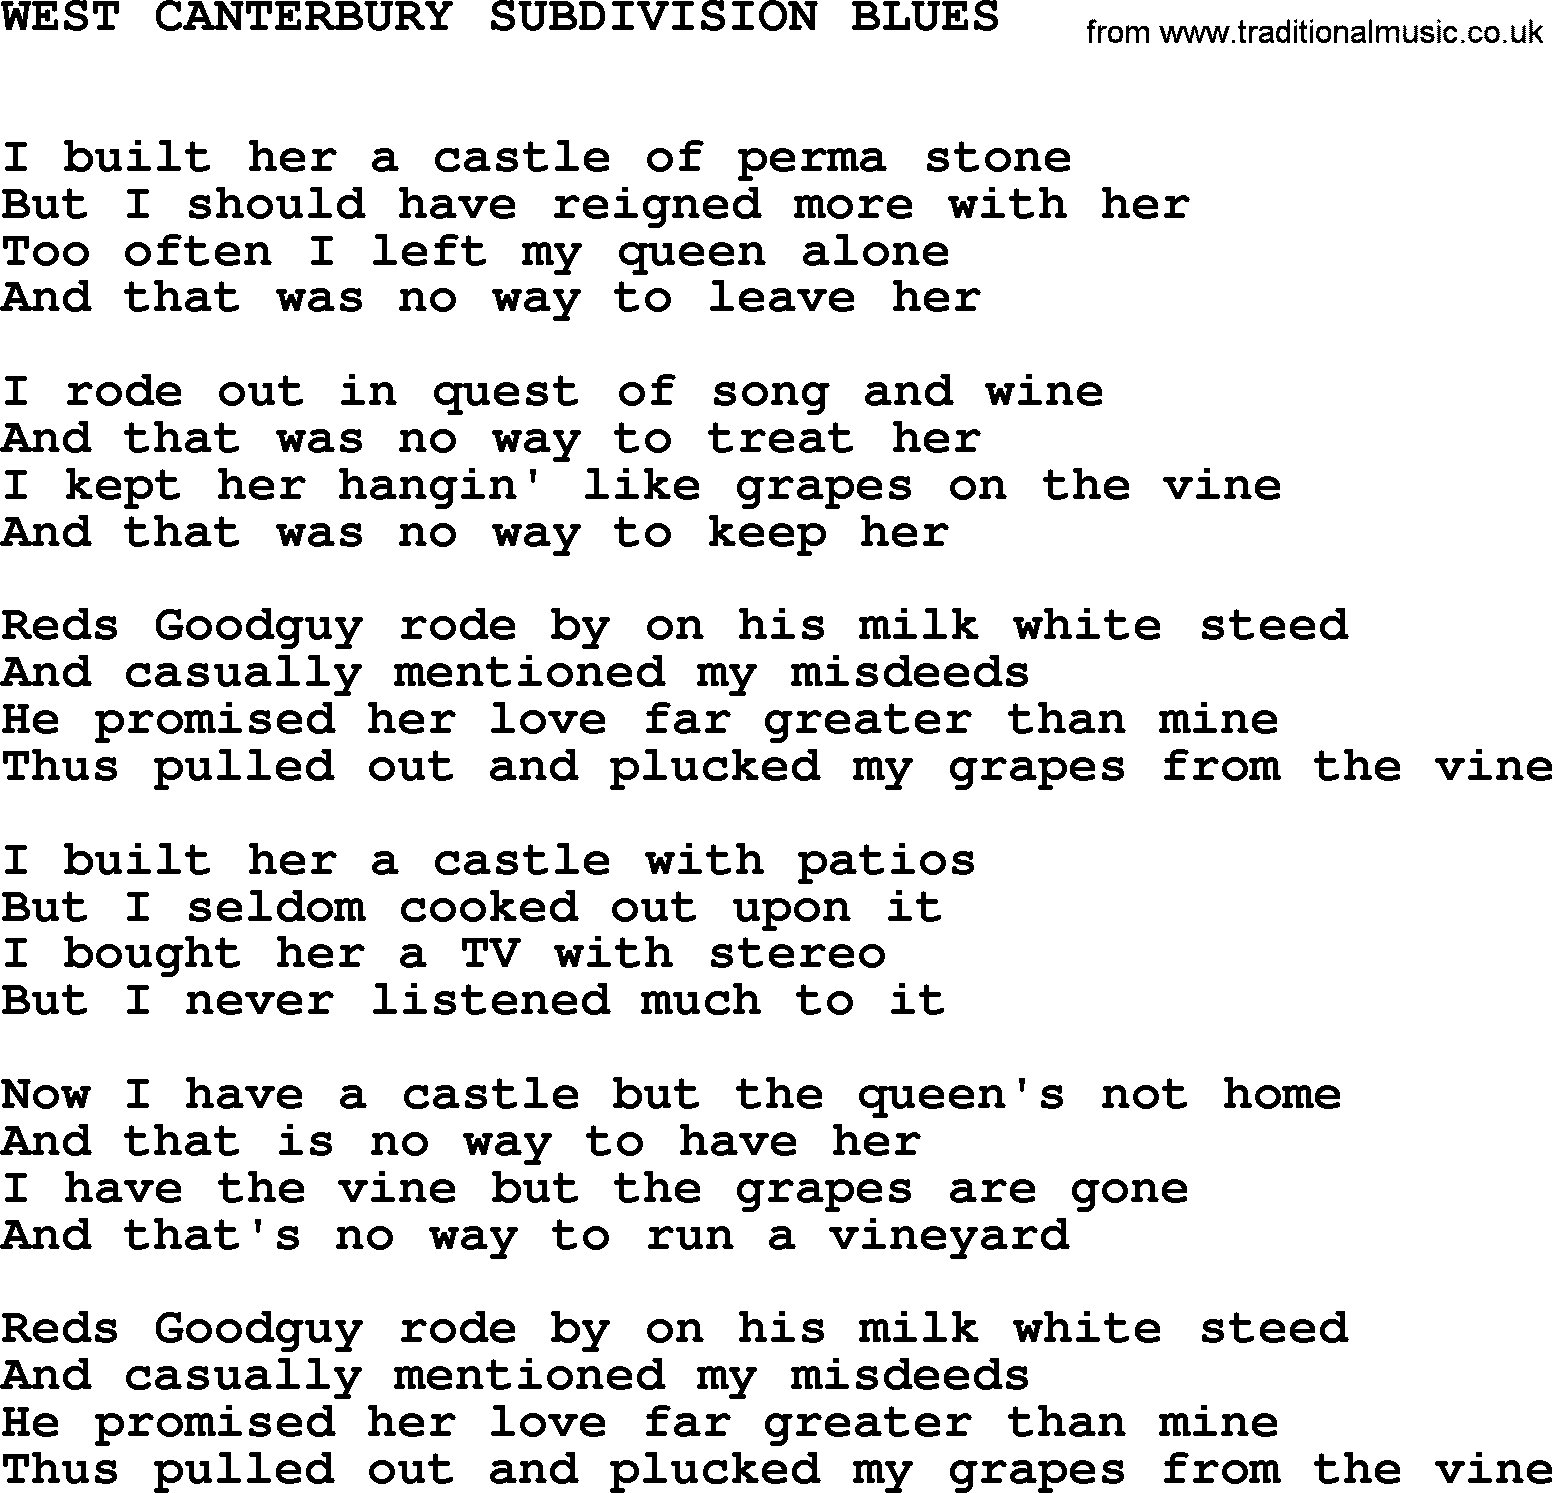 Johnny Cash song West Canterbury Subdivision Blues.txt lyrics